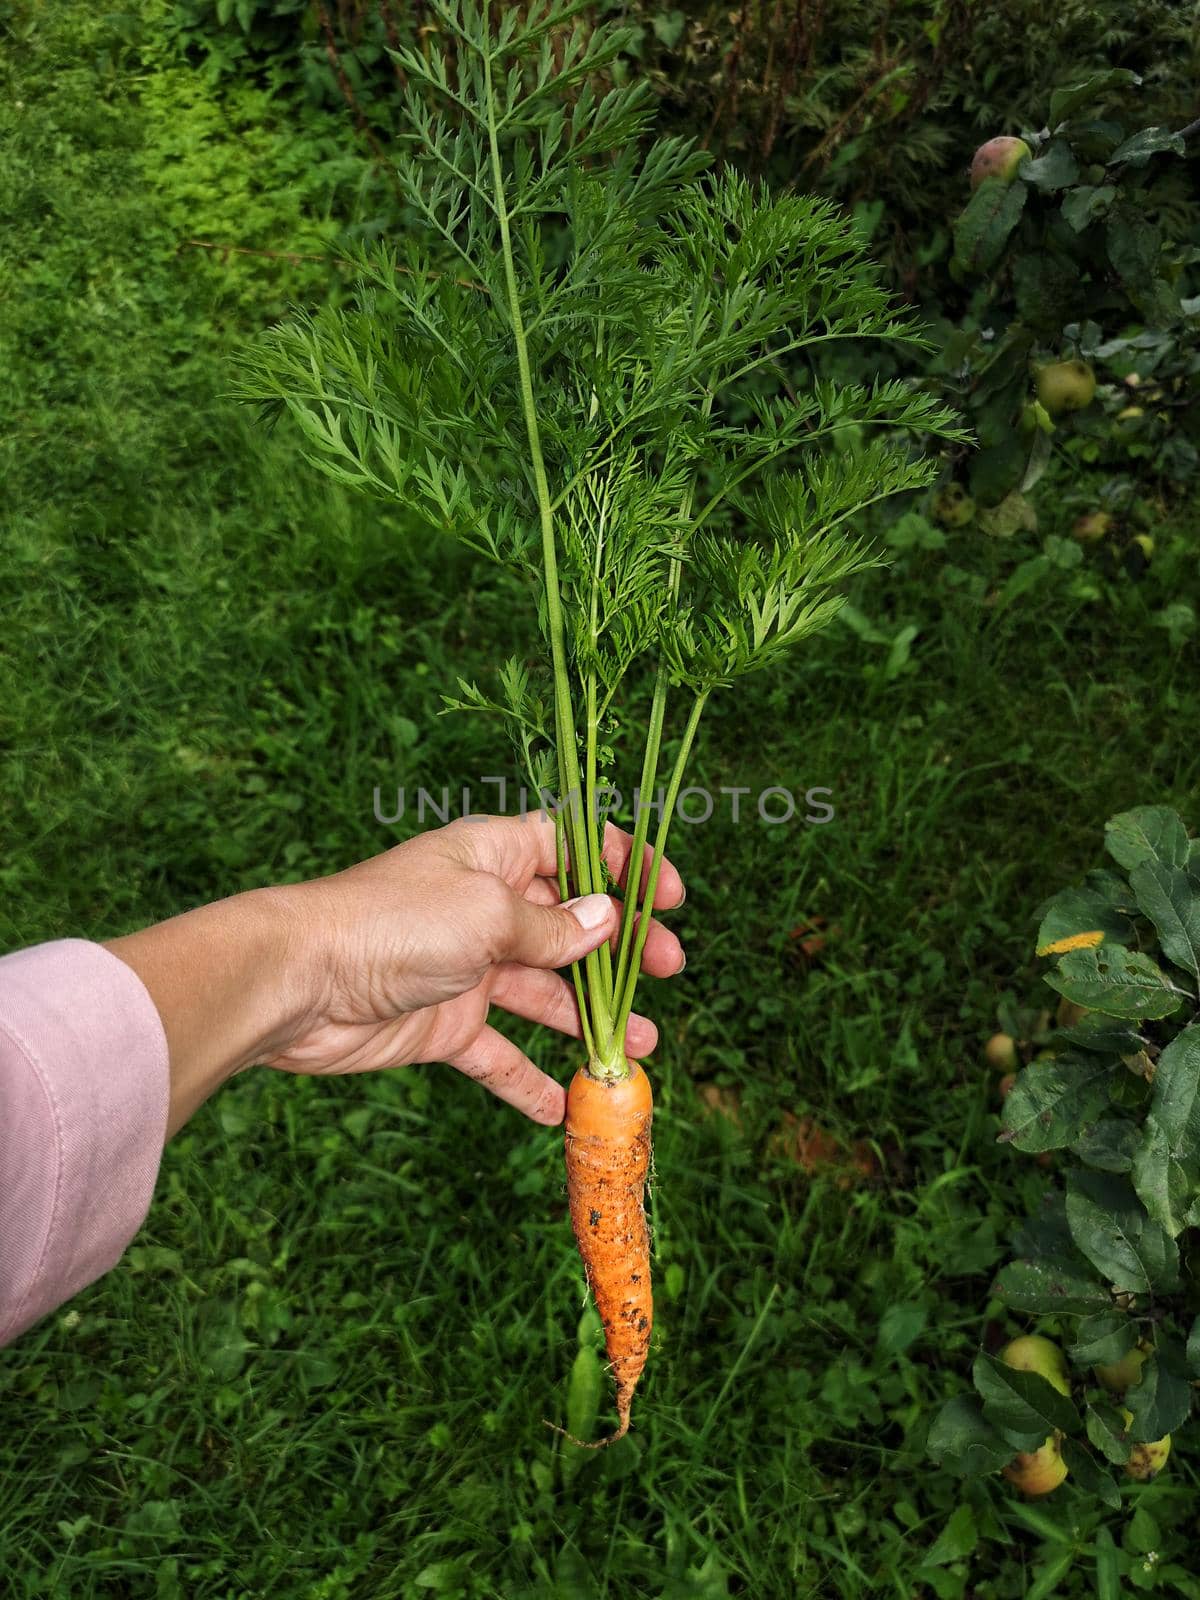 Close Up view Of Urban Farmer Harvesting Organic Carrots in the farden by galinasharapova